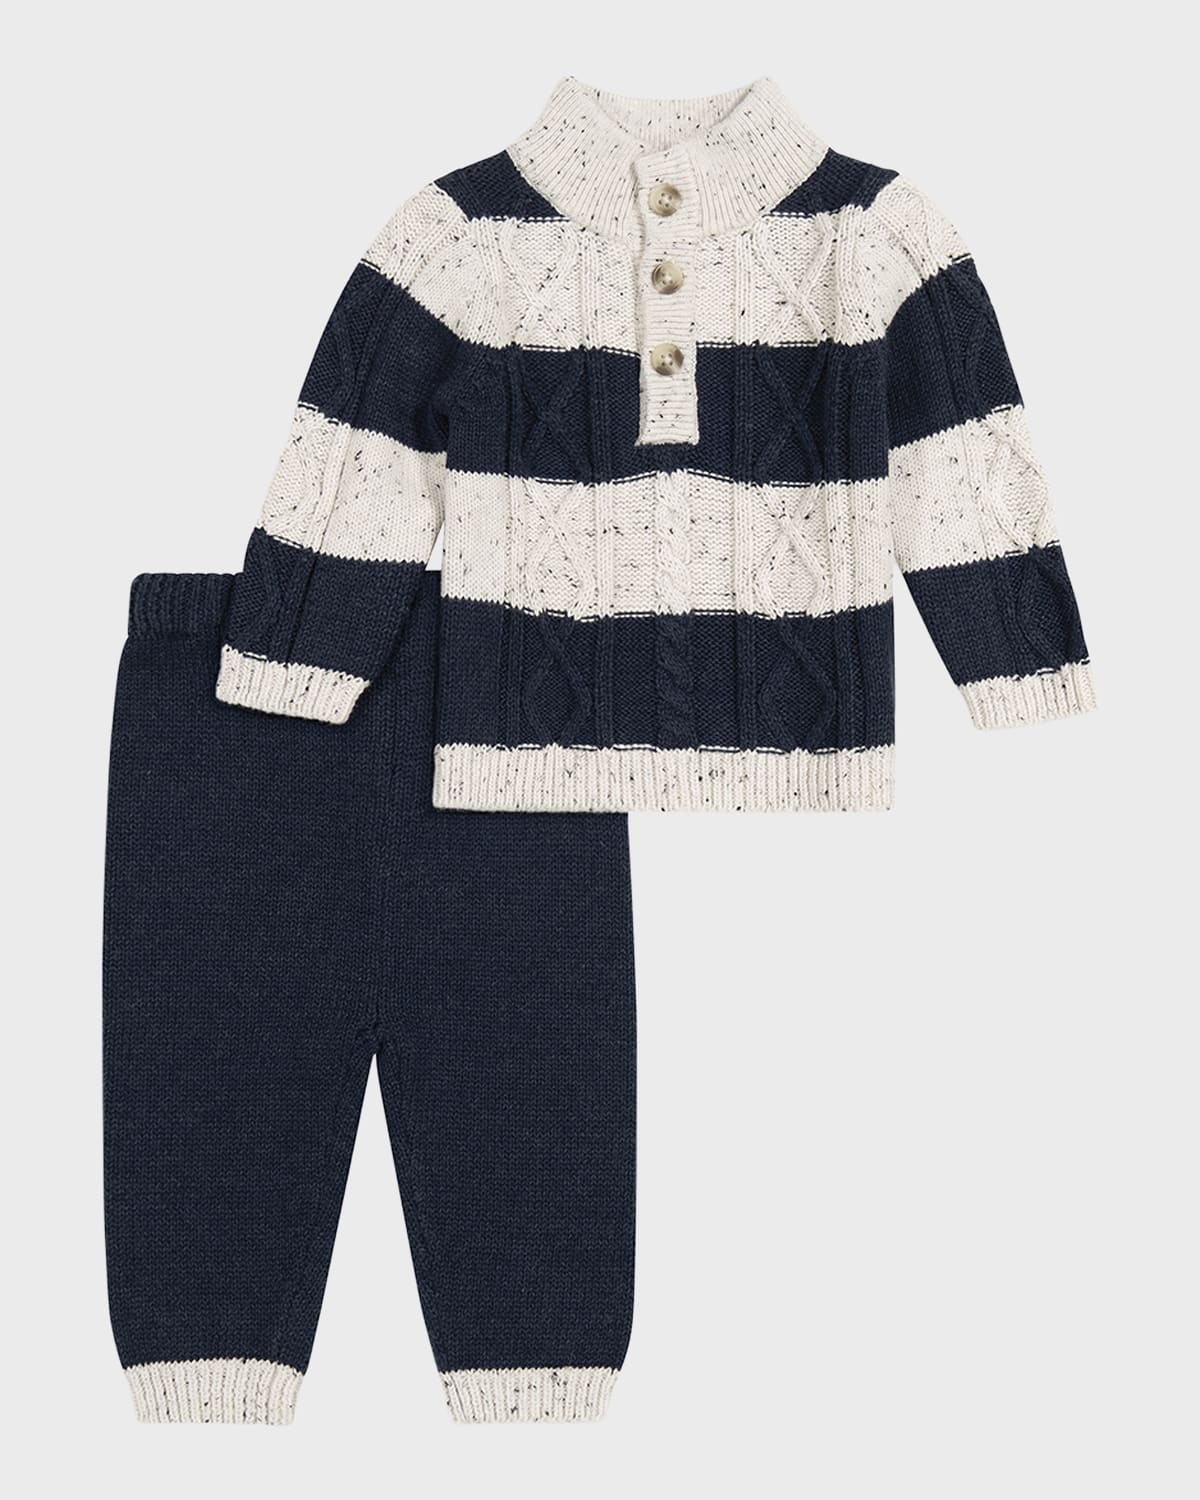 Miniclasix Kids' Boy's Striped Shawl Knit Sweater In Navy